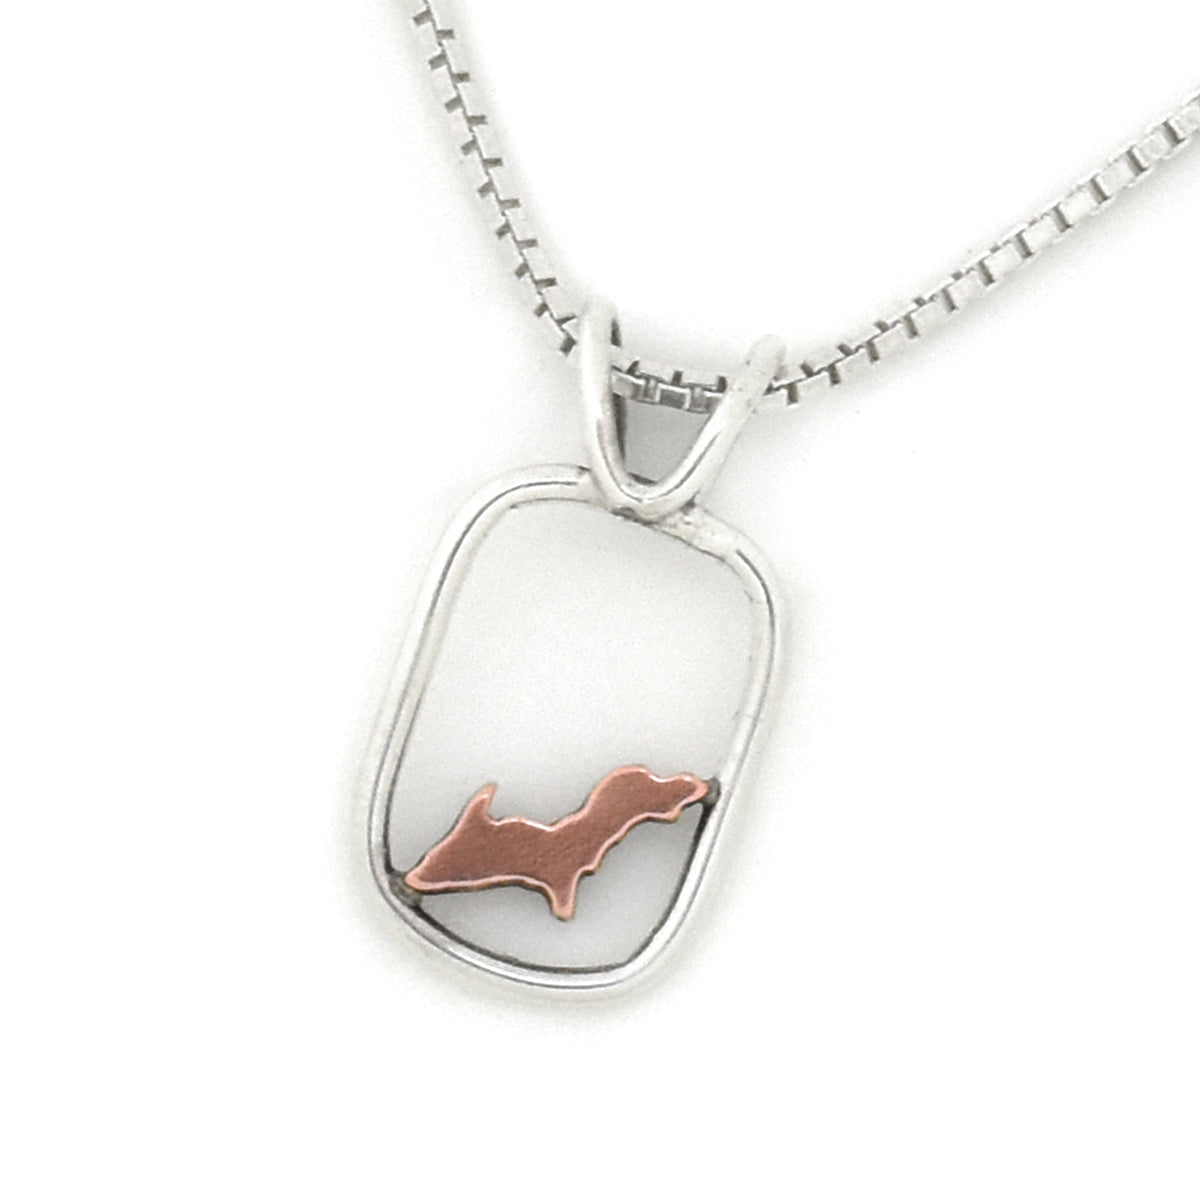 Tiny Copper Upper Peninsula Pendant - Mixed Metal Pendant   7083 - handmade by Beth Millner Jewelry